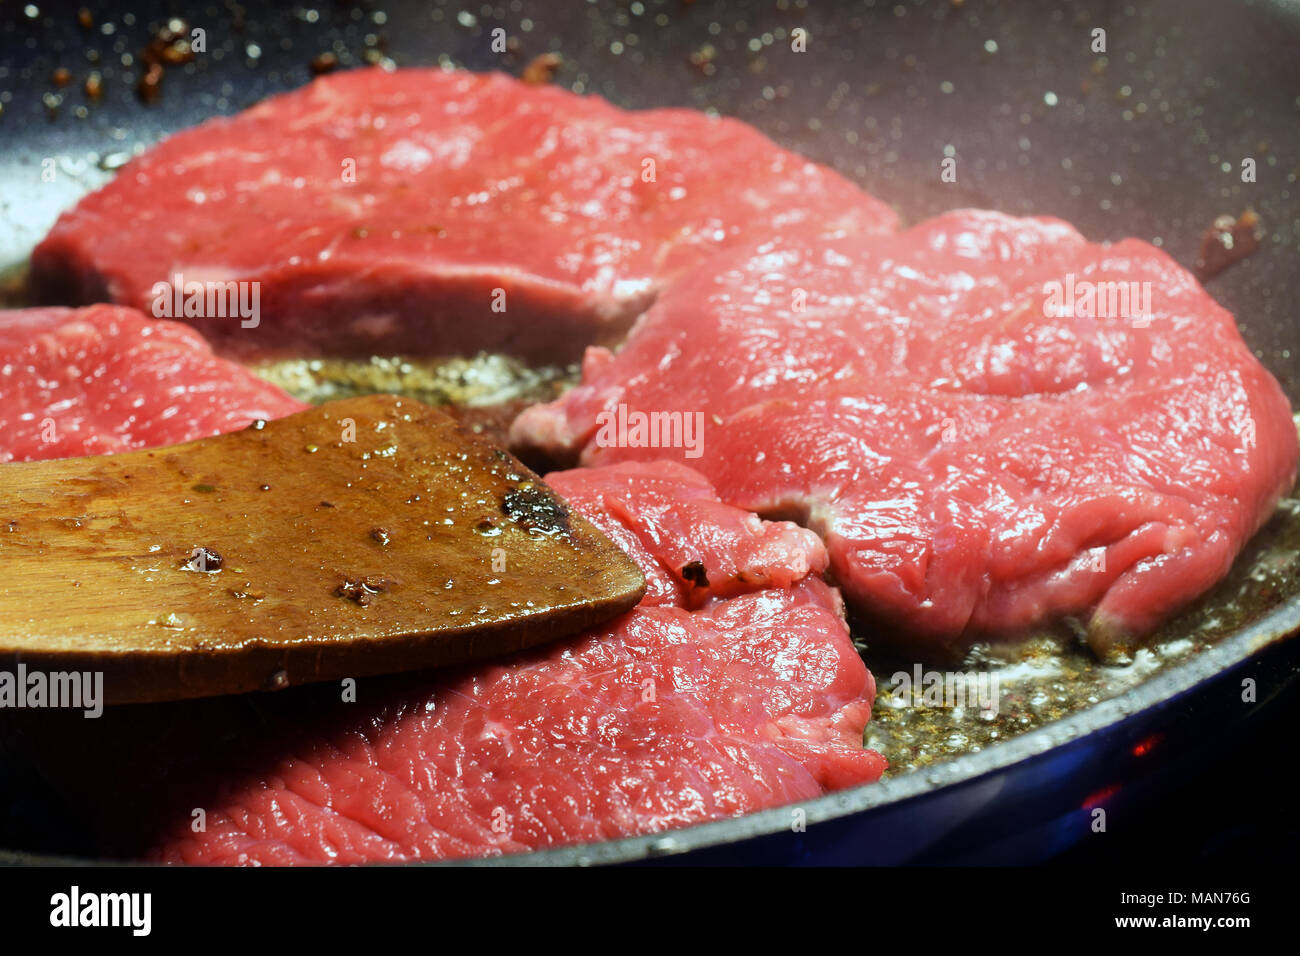 Raw sirloin beef steaks on frying pan. Stock Photo